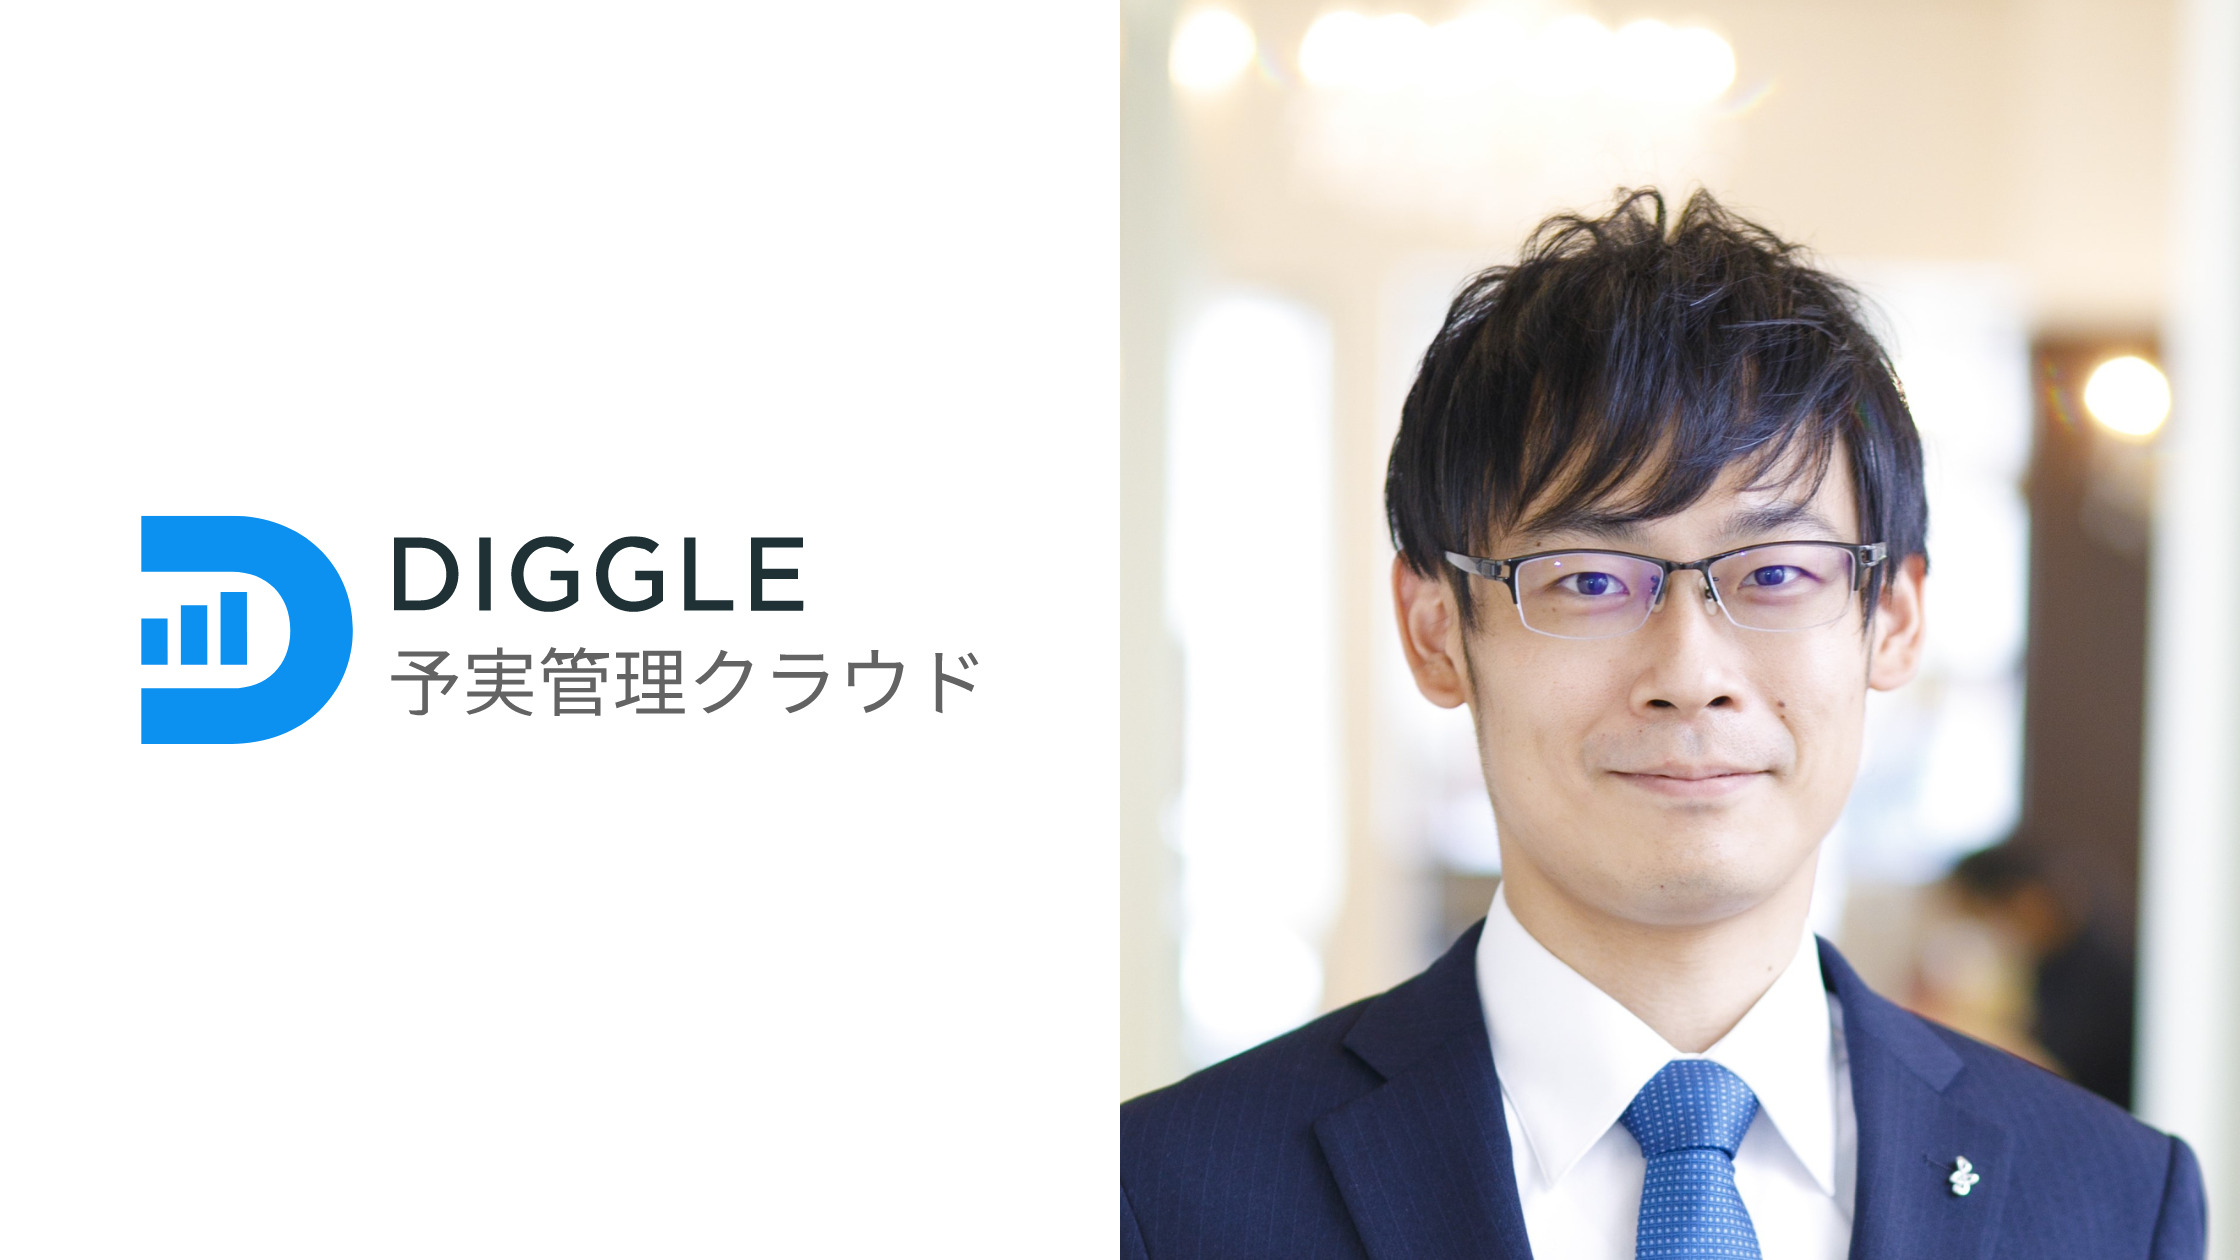 DIGGLE株式会社の導入事例インタビュー